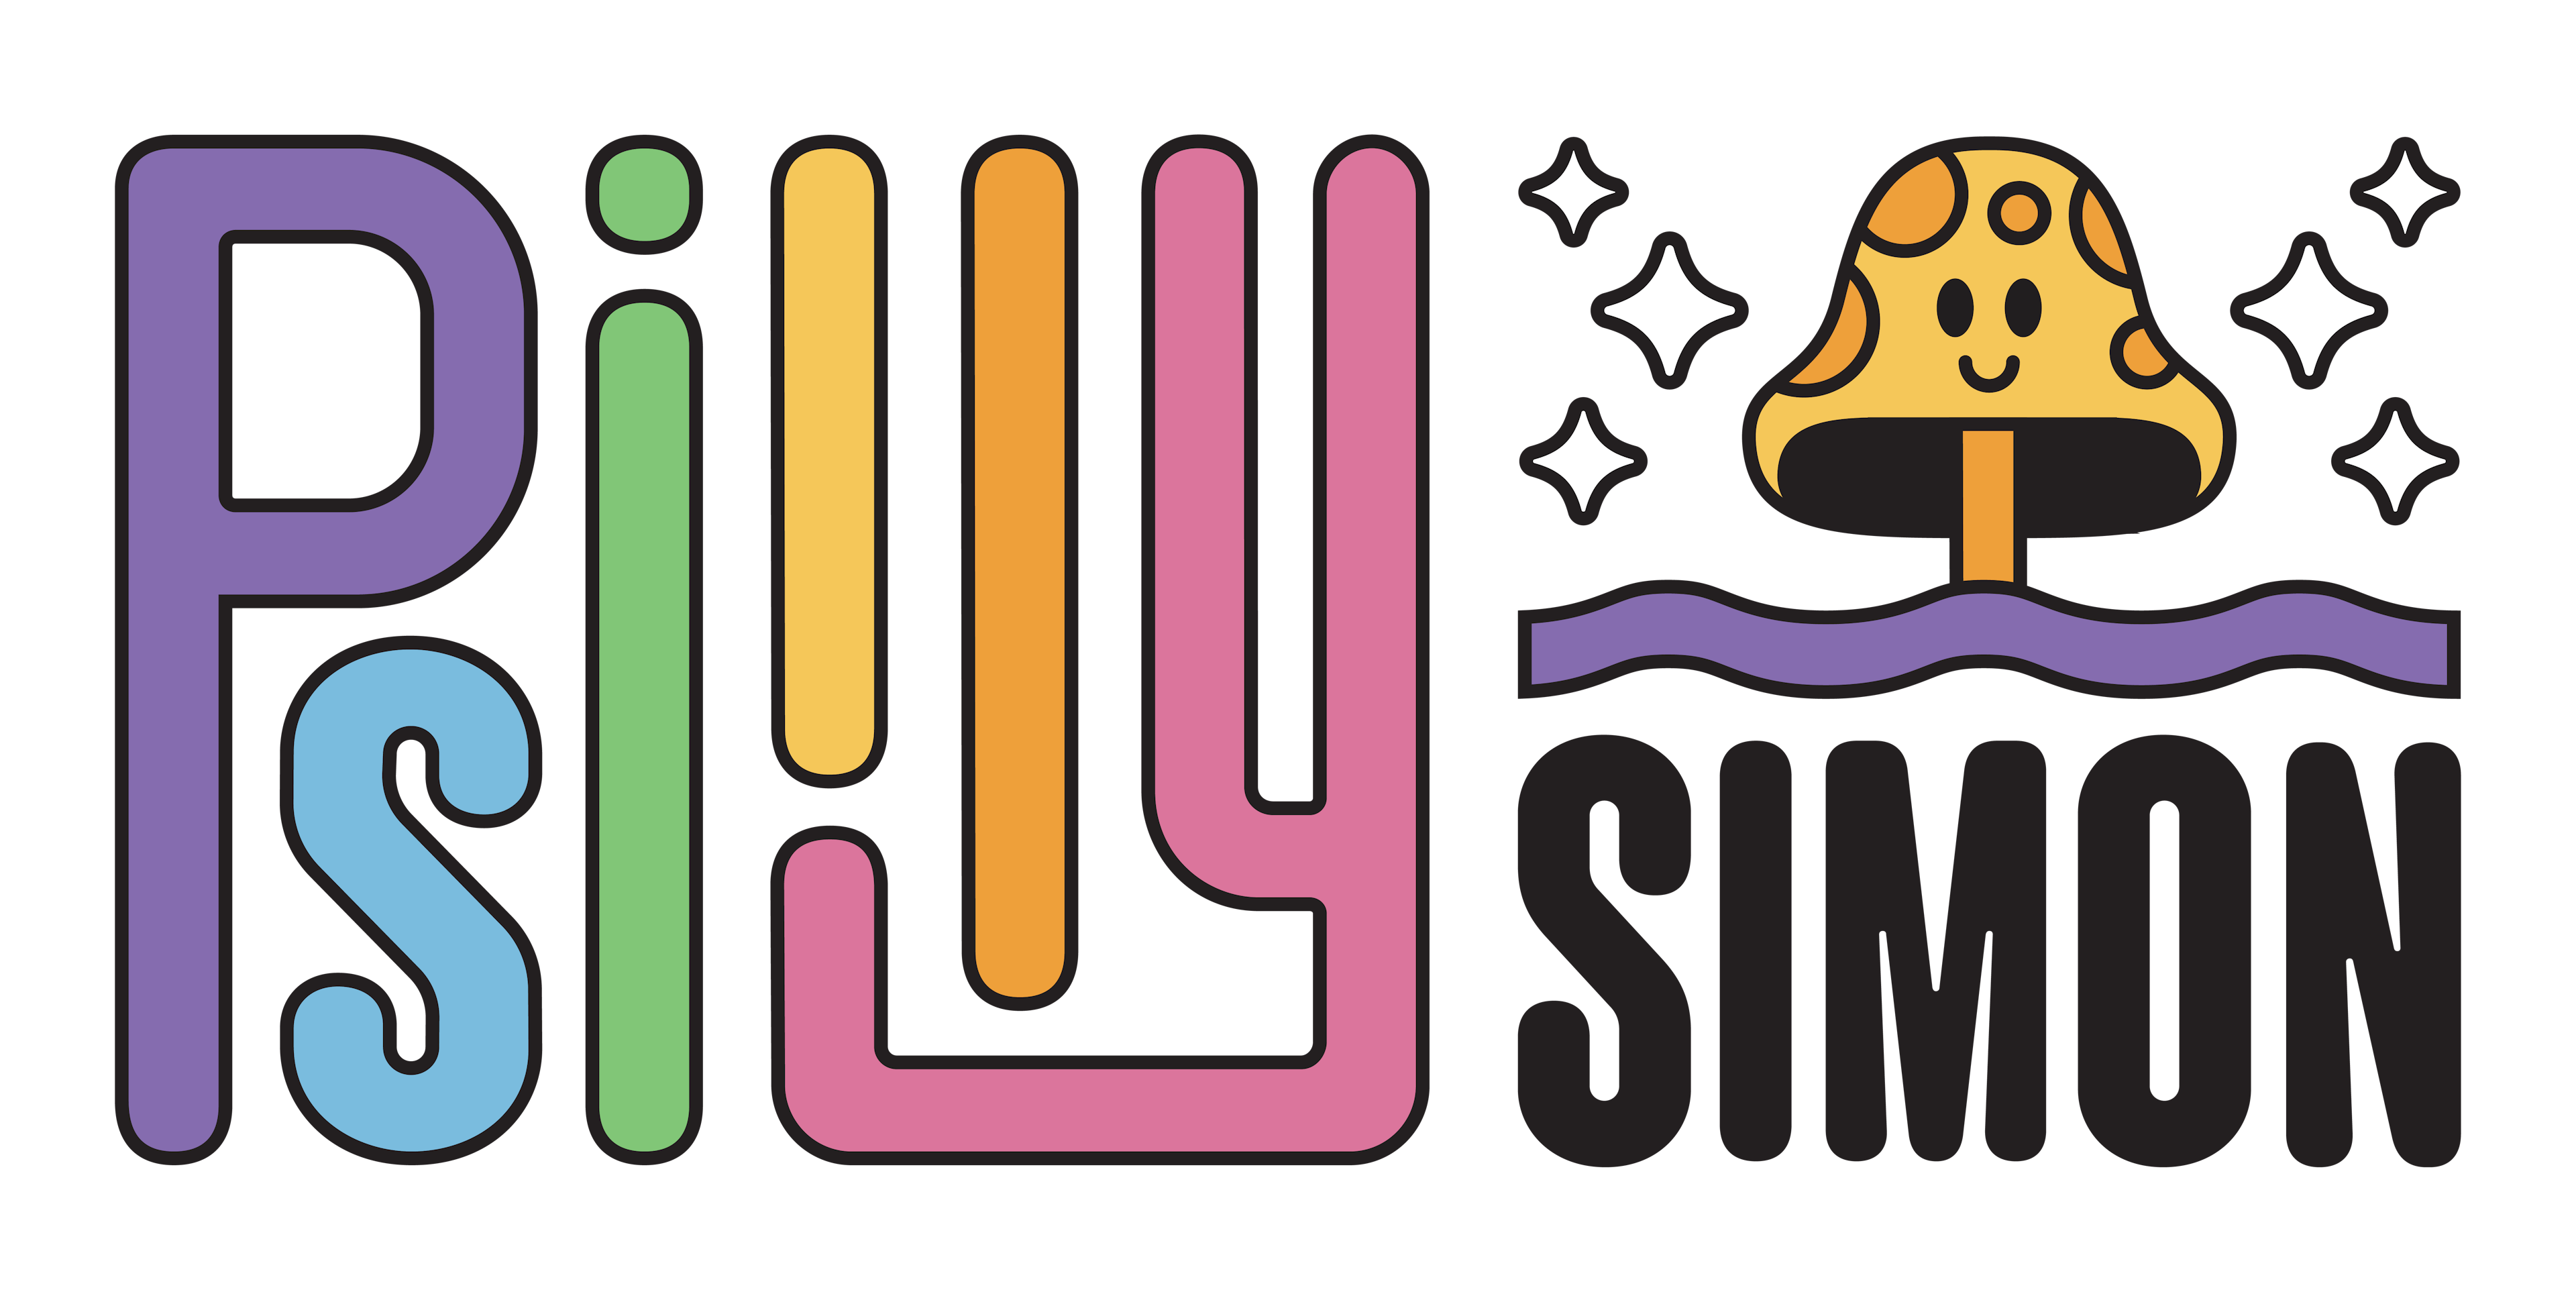 Psilly Simon logo